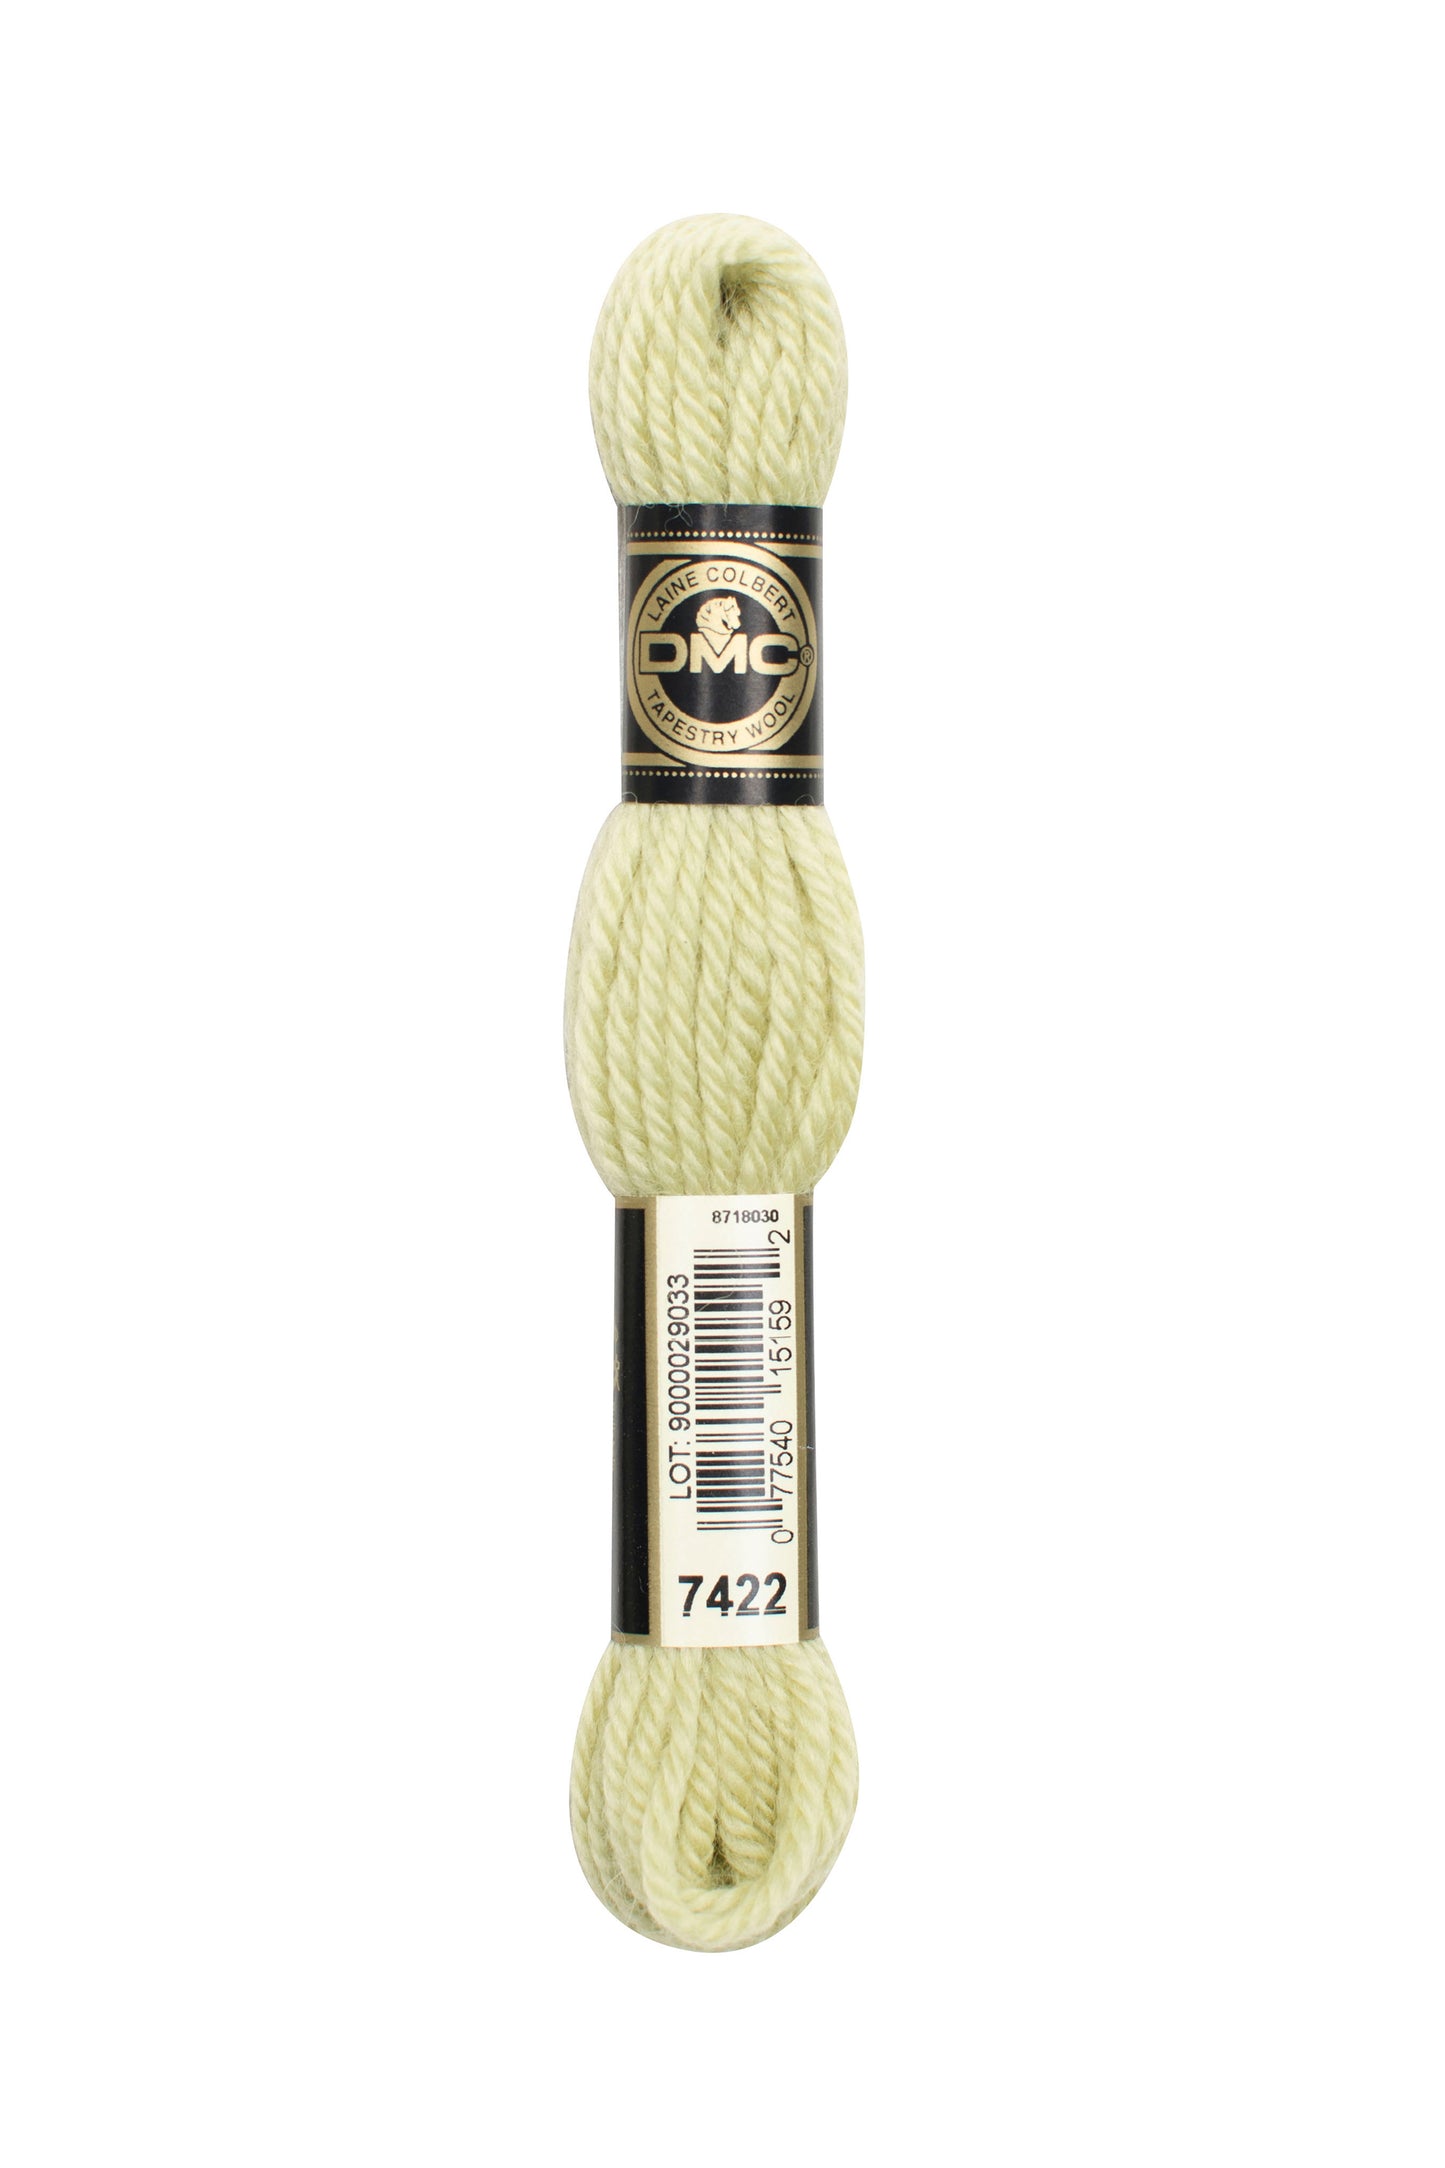 7422 – DMC Tapestry Wool